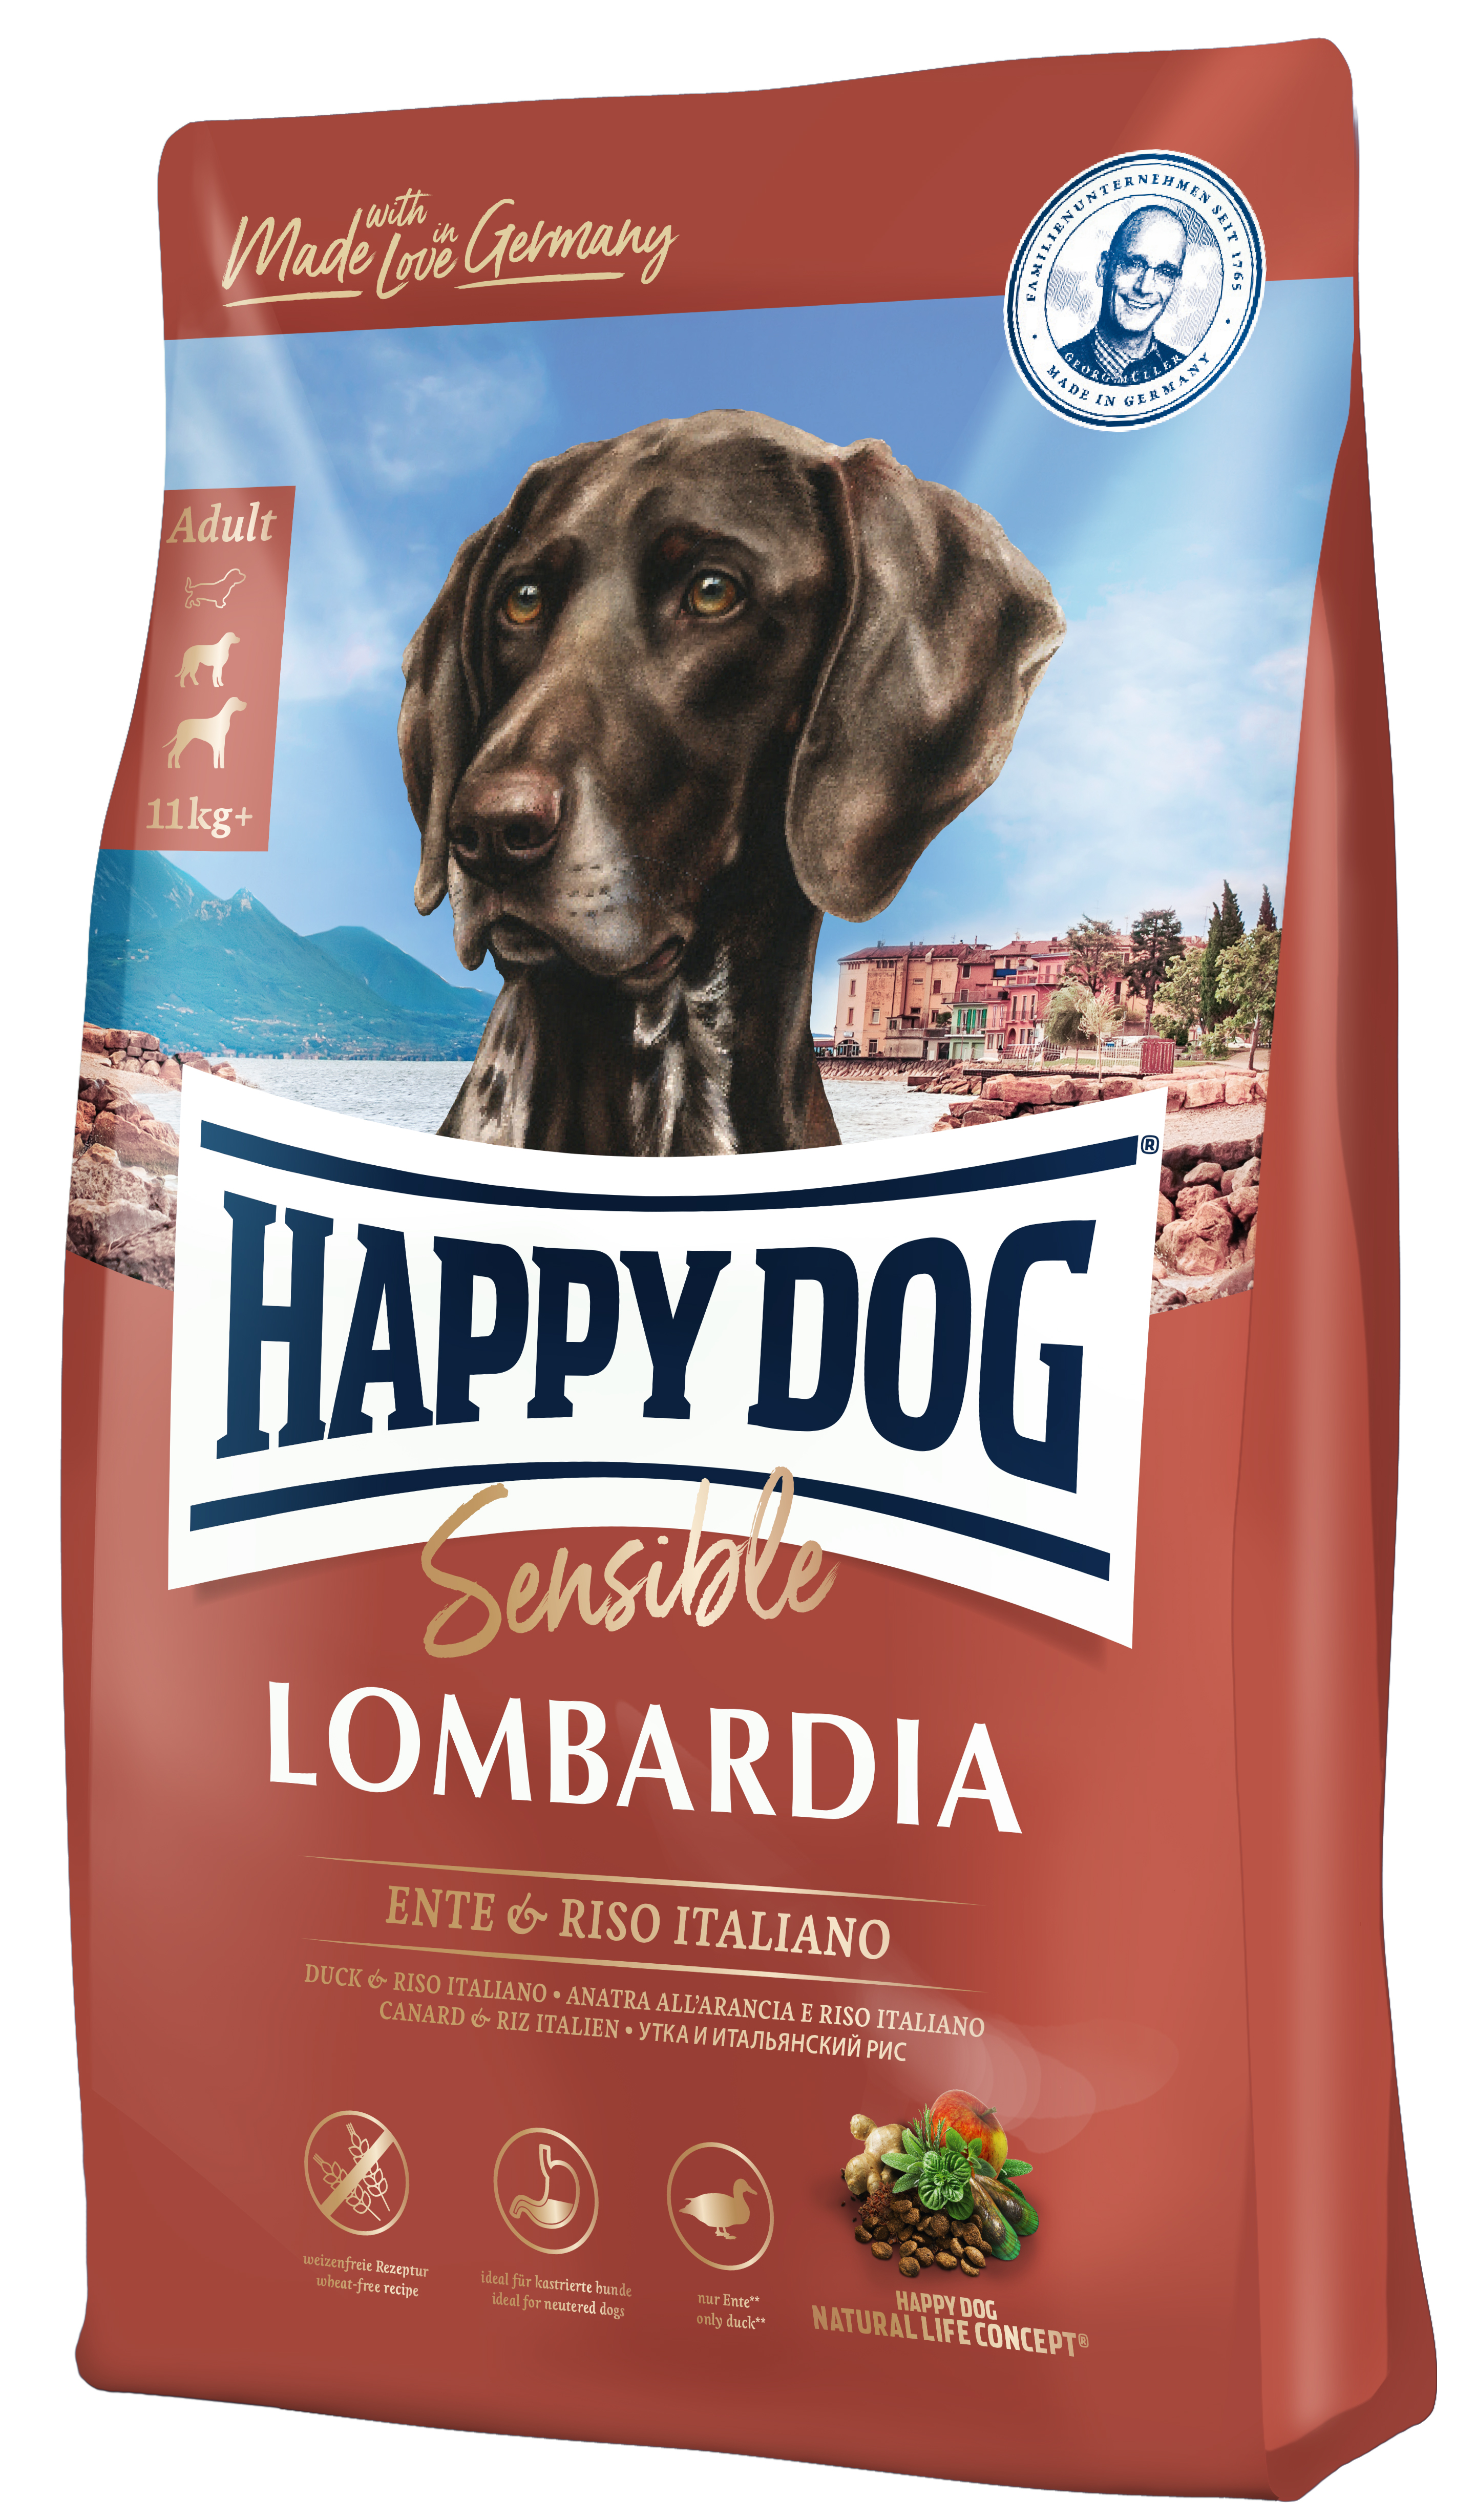 Happy Dog Sensible Lombardia 2,8 kg